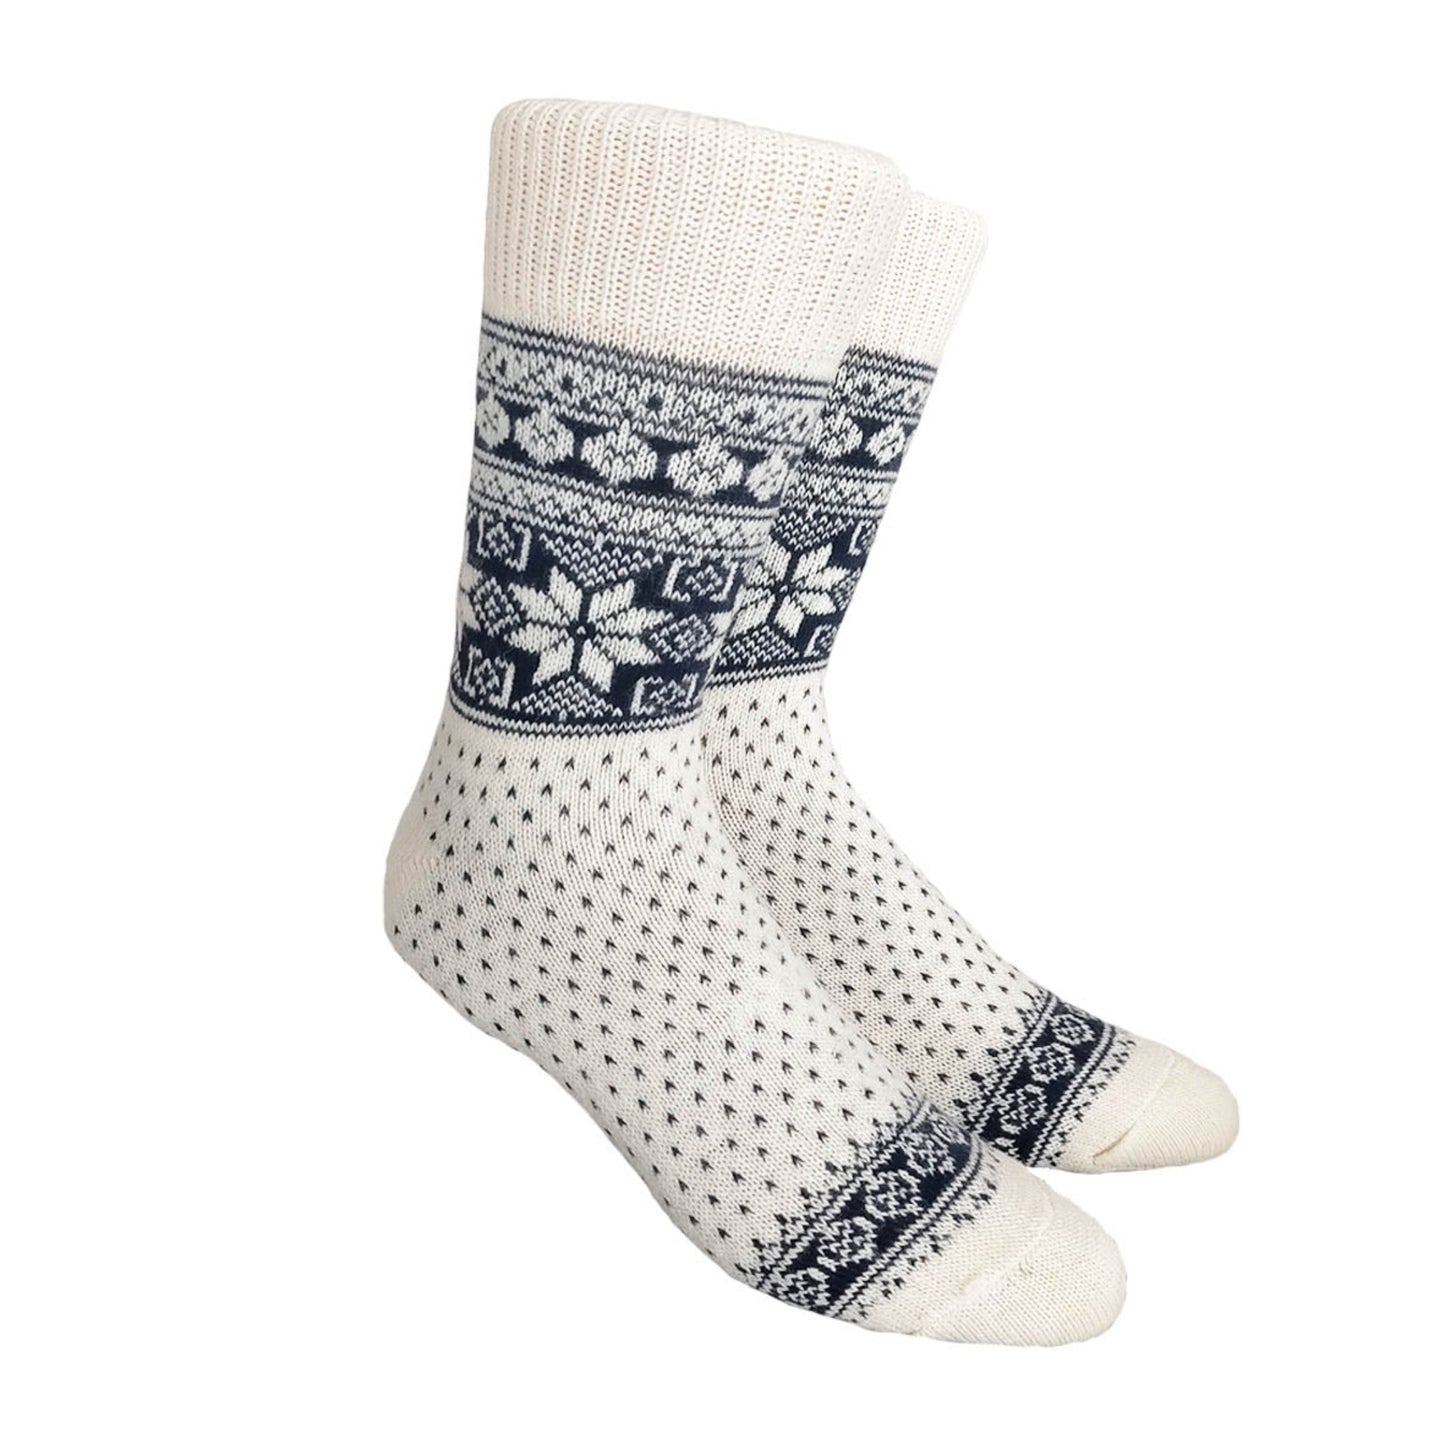 NORWOOL Wool Socks Snowflakes, White/Charcoal (6583972757569)